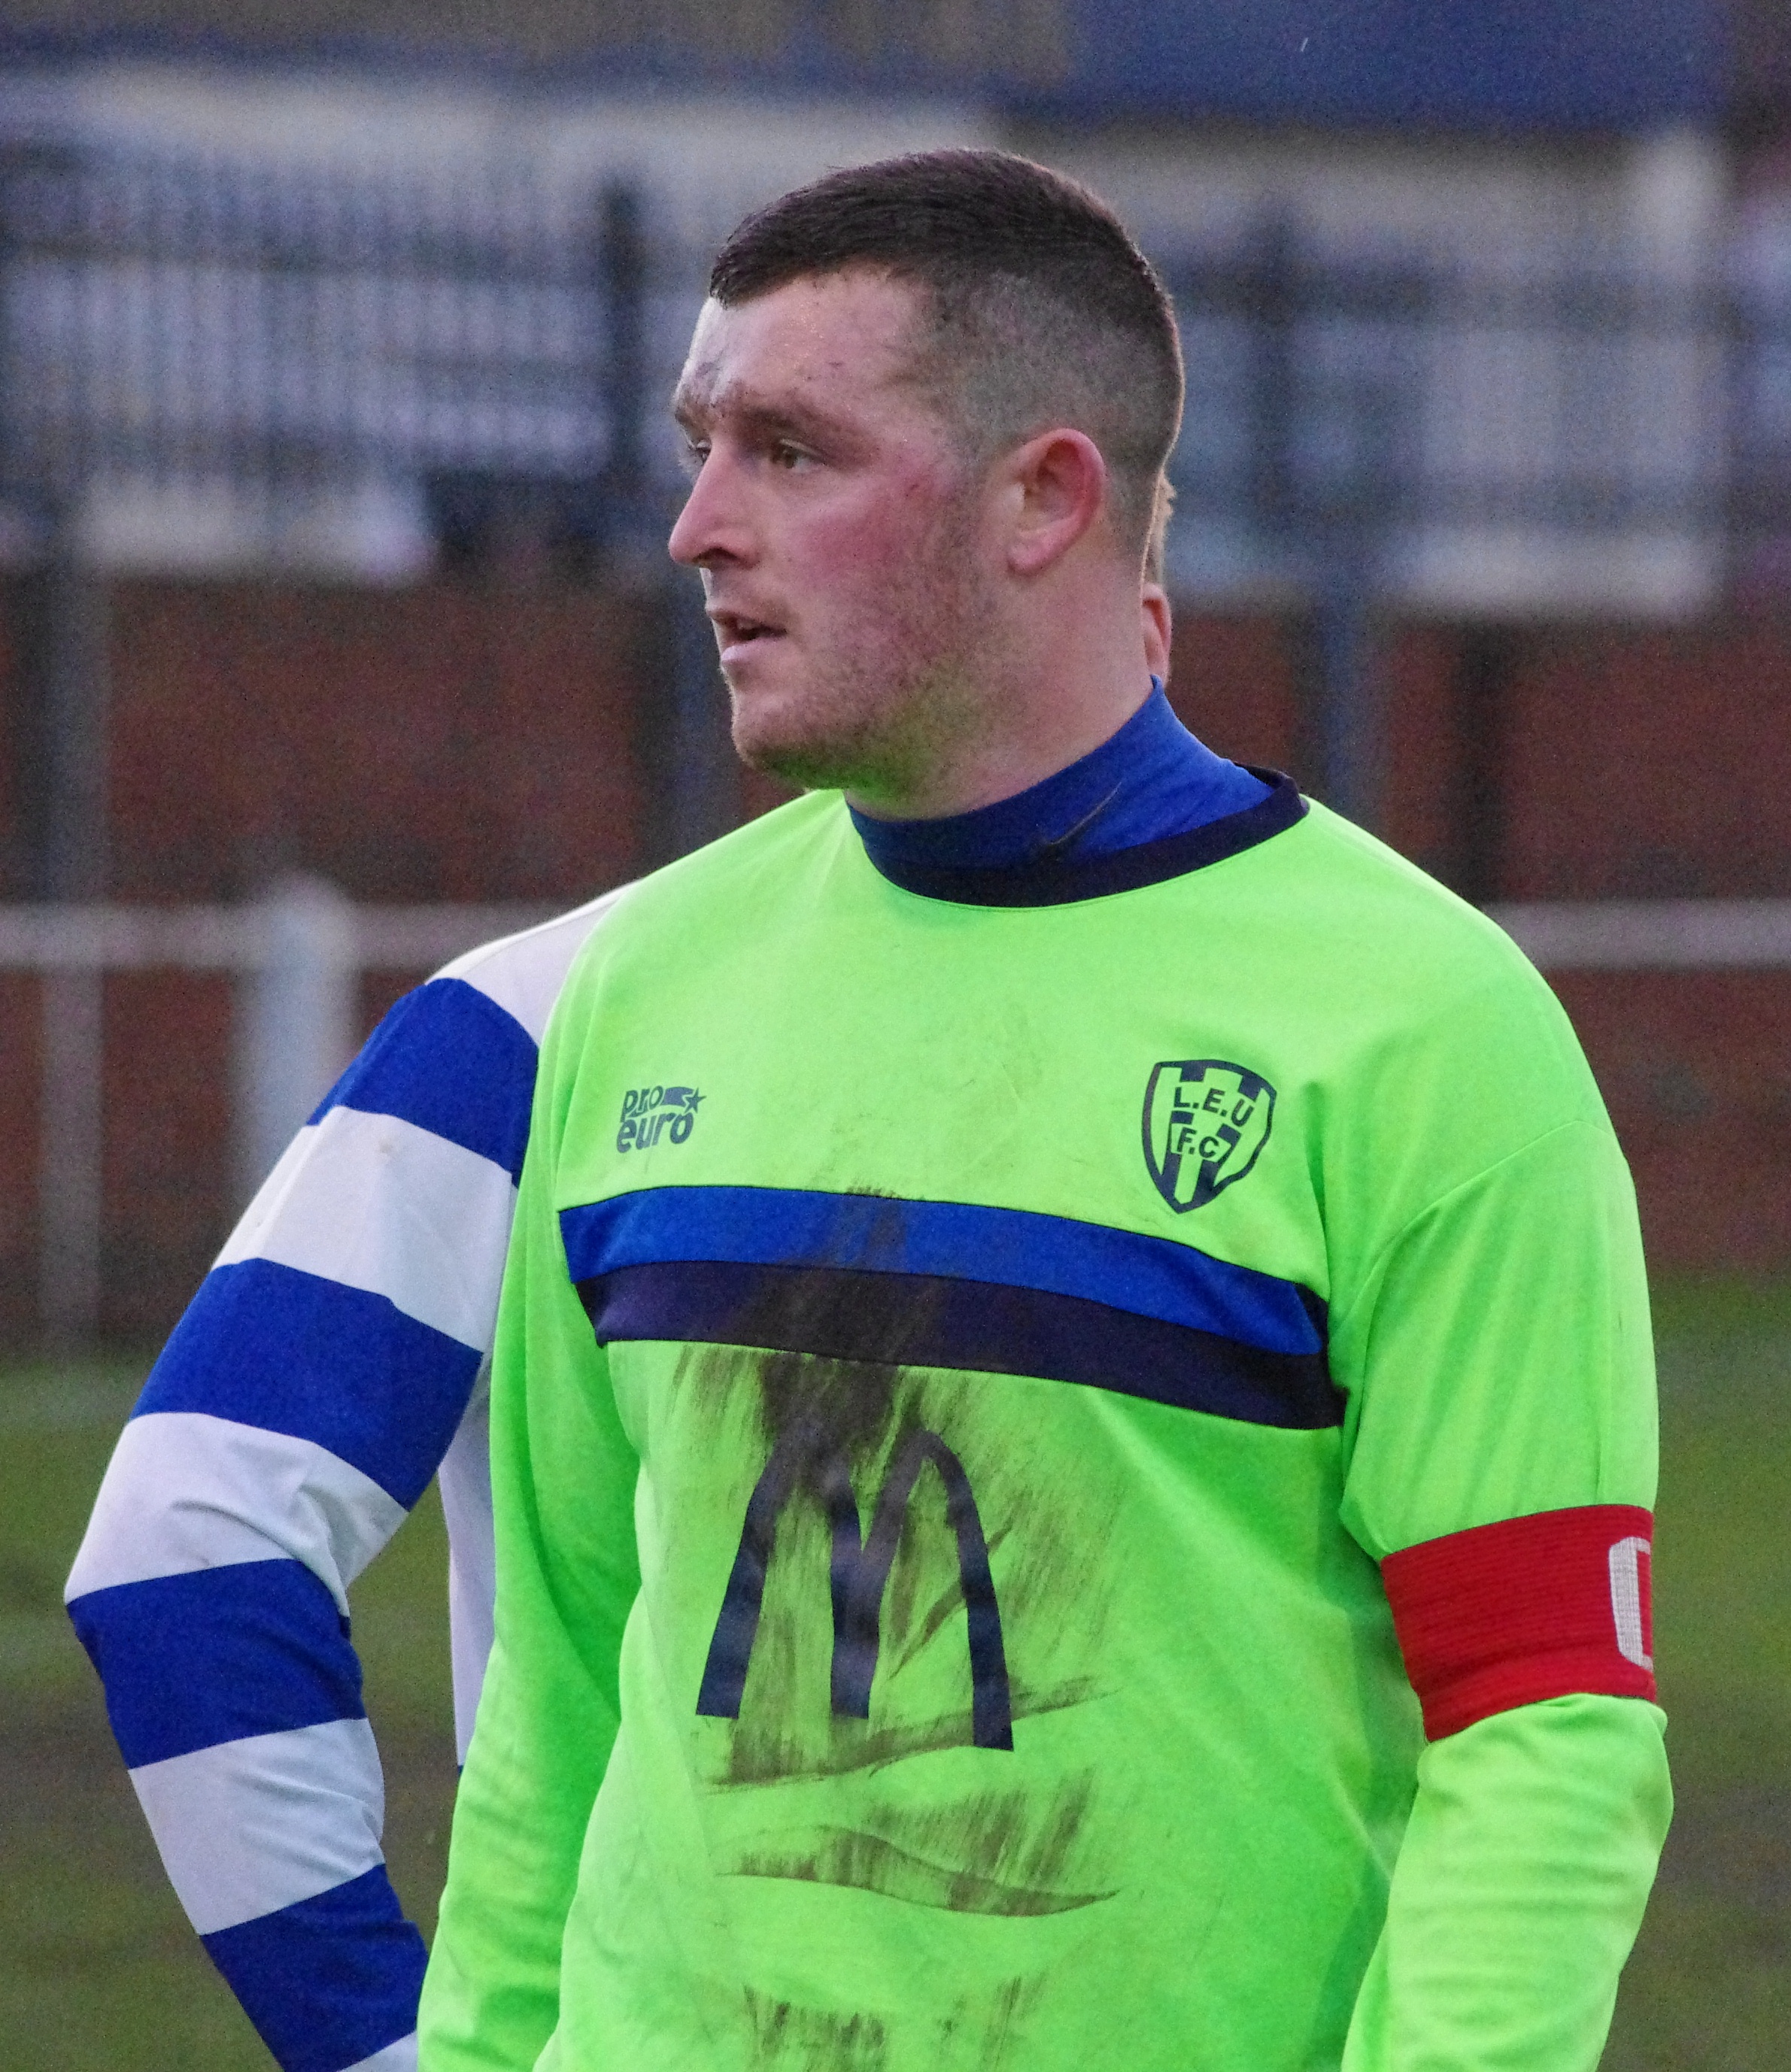 Long Eaton United captain Shaun Rickford scored twice in the 3-0 win at Glasshoughton Welfare